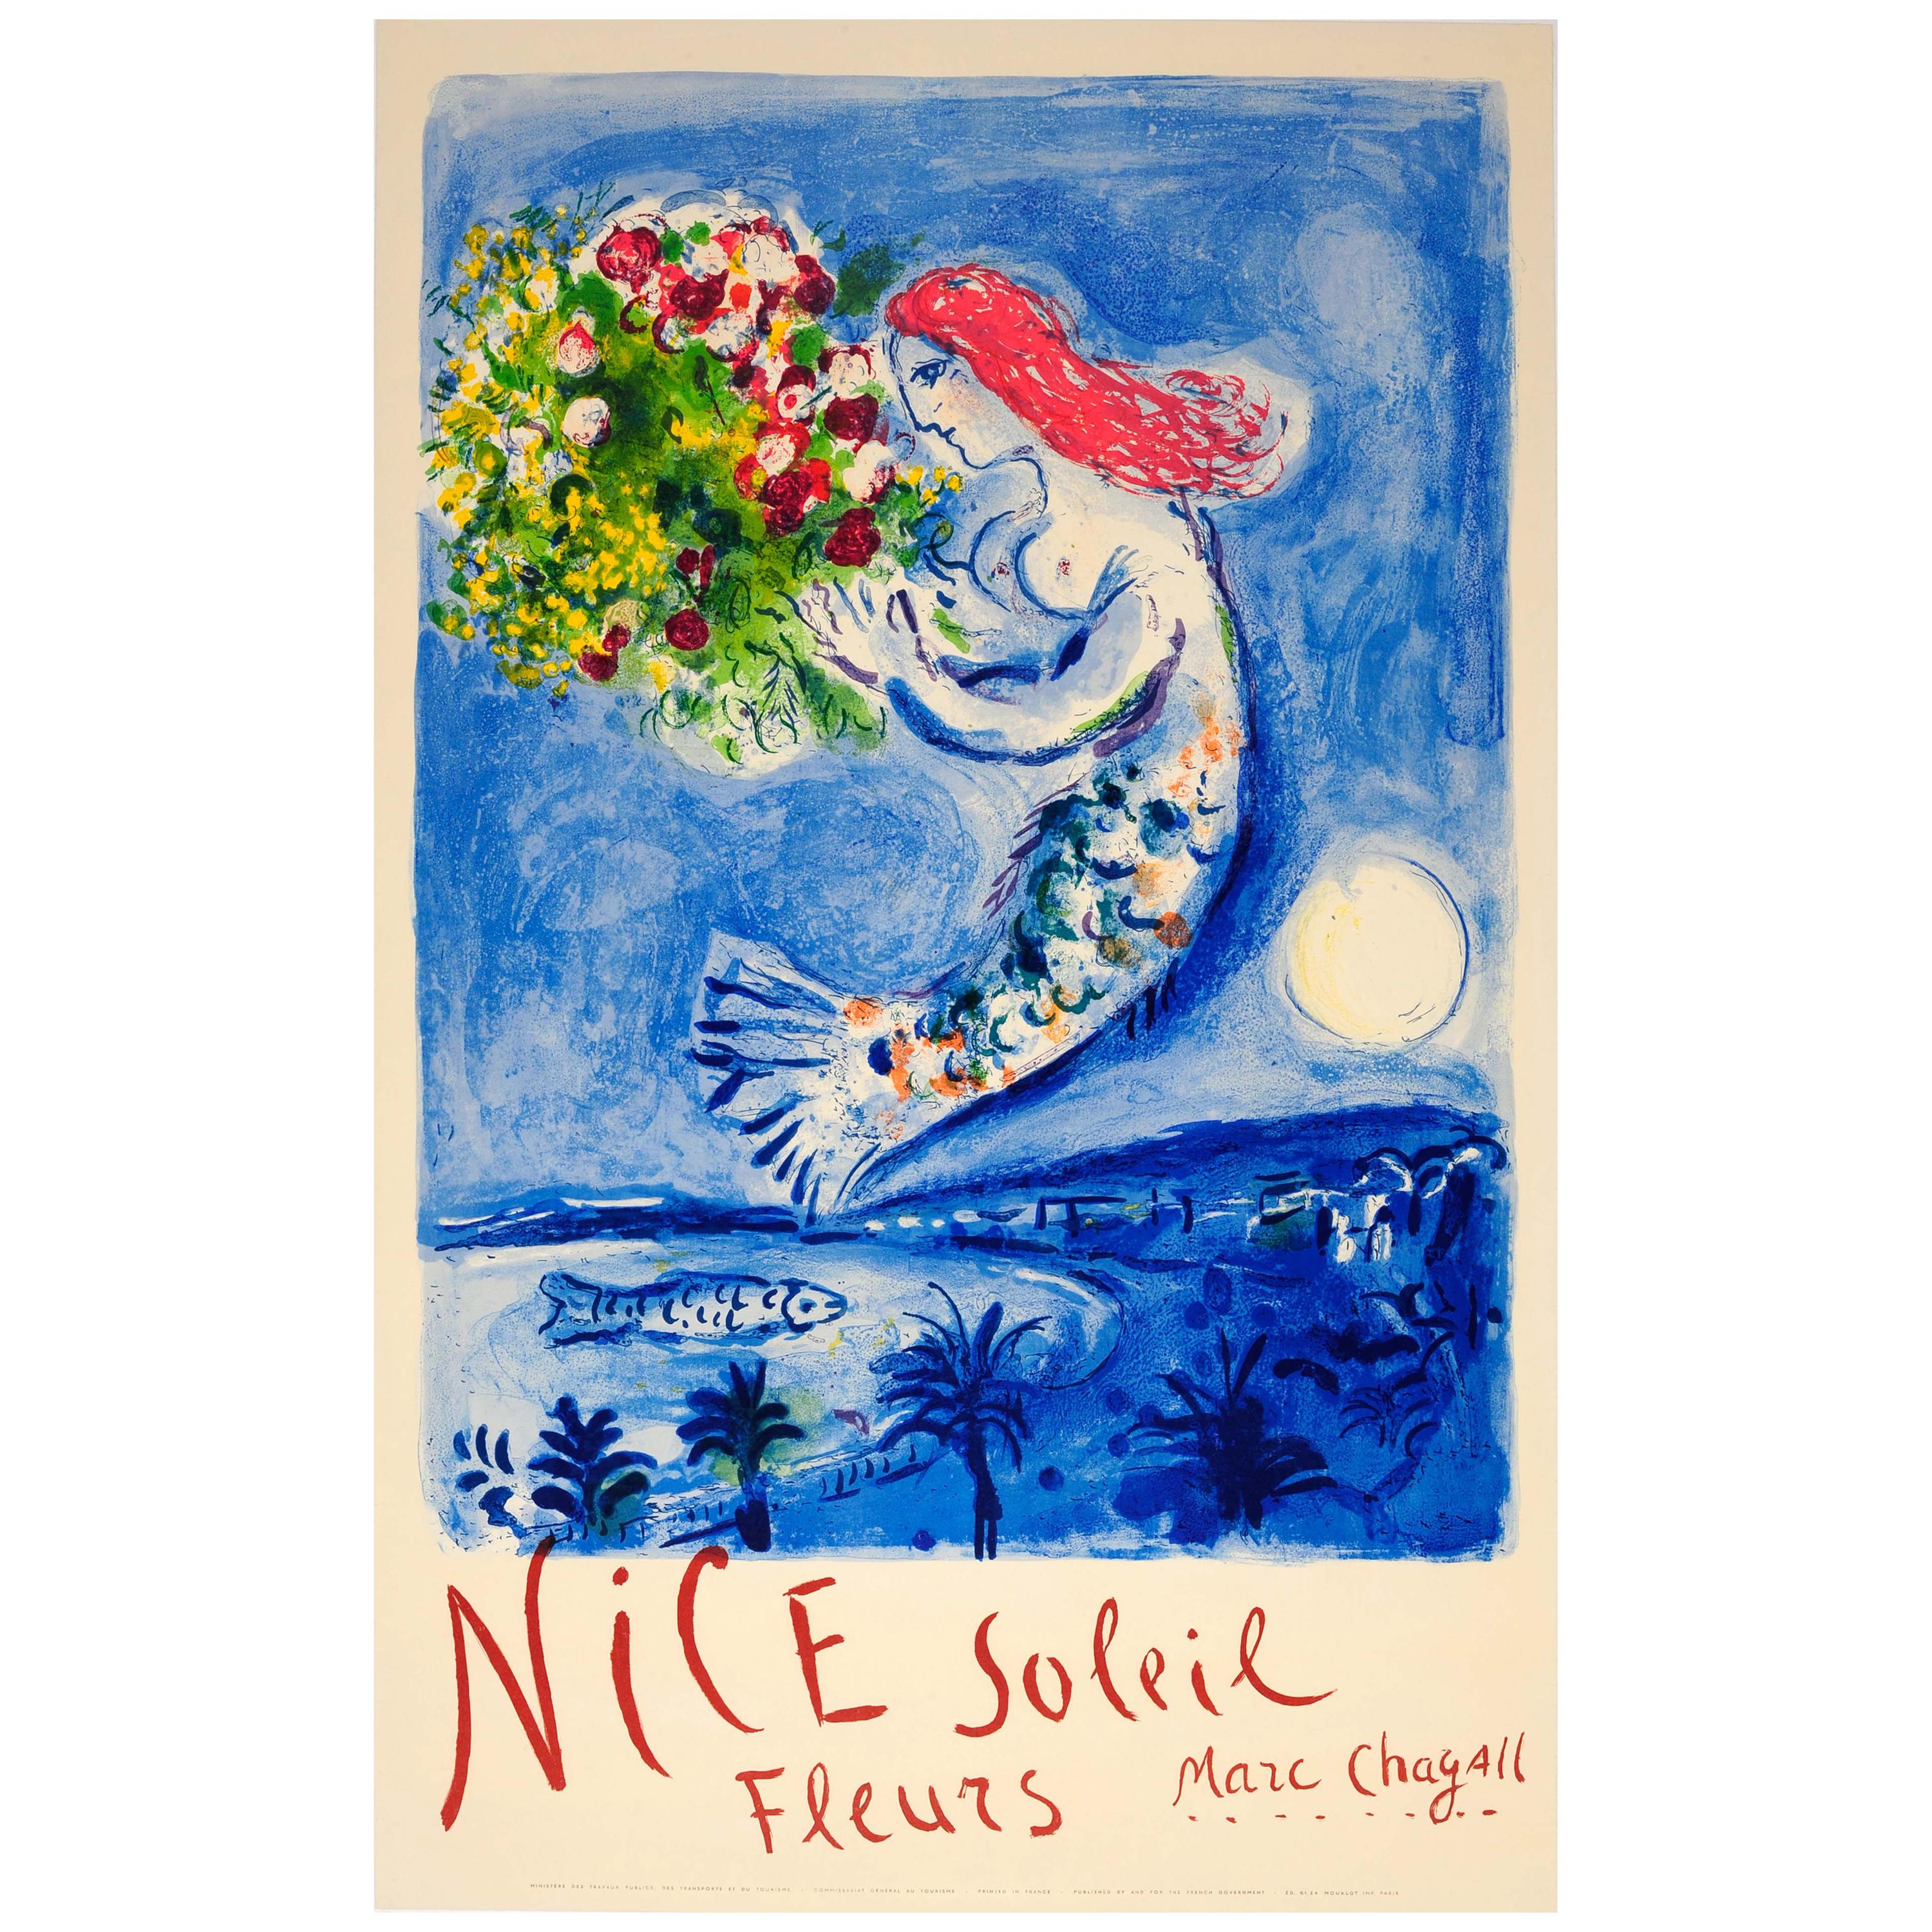 Original Vintage Travel Poster for Nice Soleil Fleurs Marc Chagall Sun Flowers